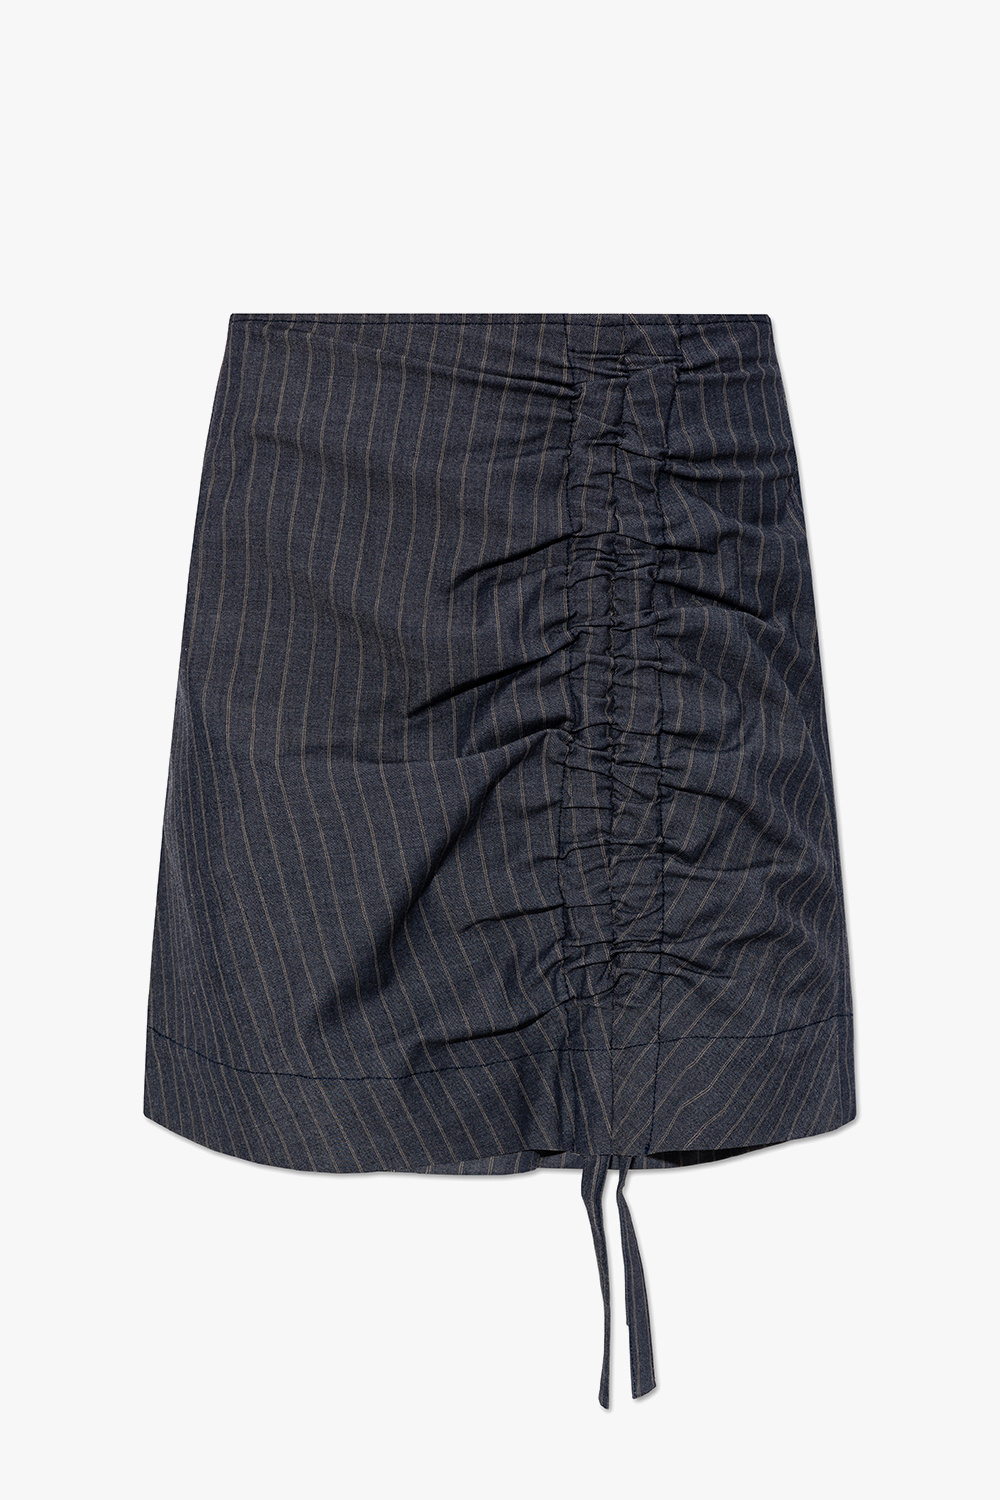 Ganni Striped skirt